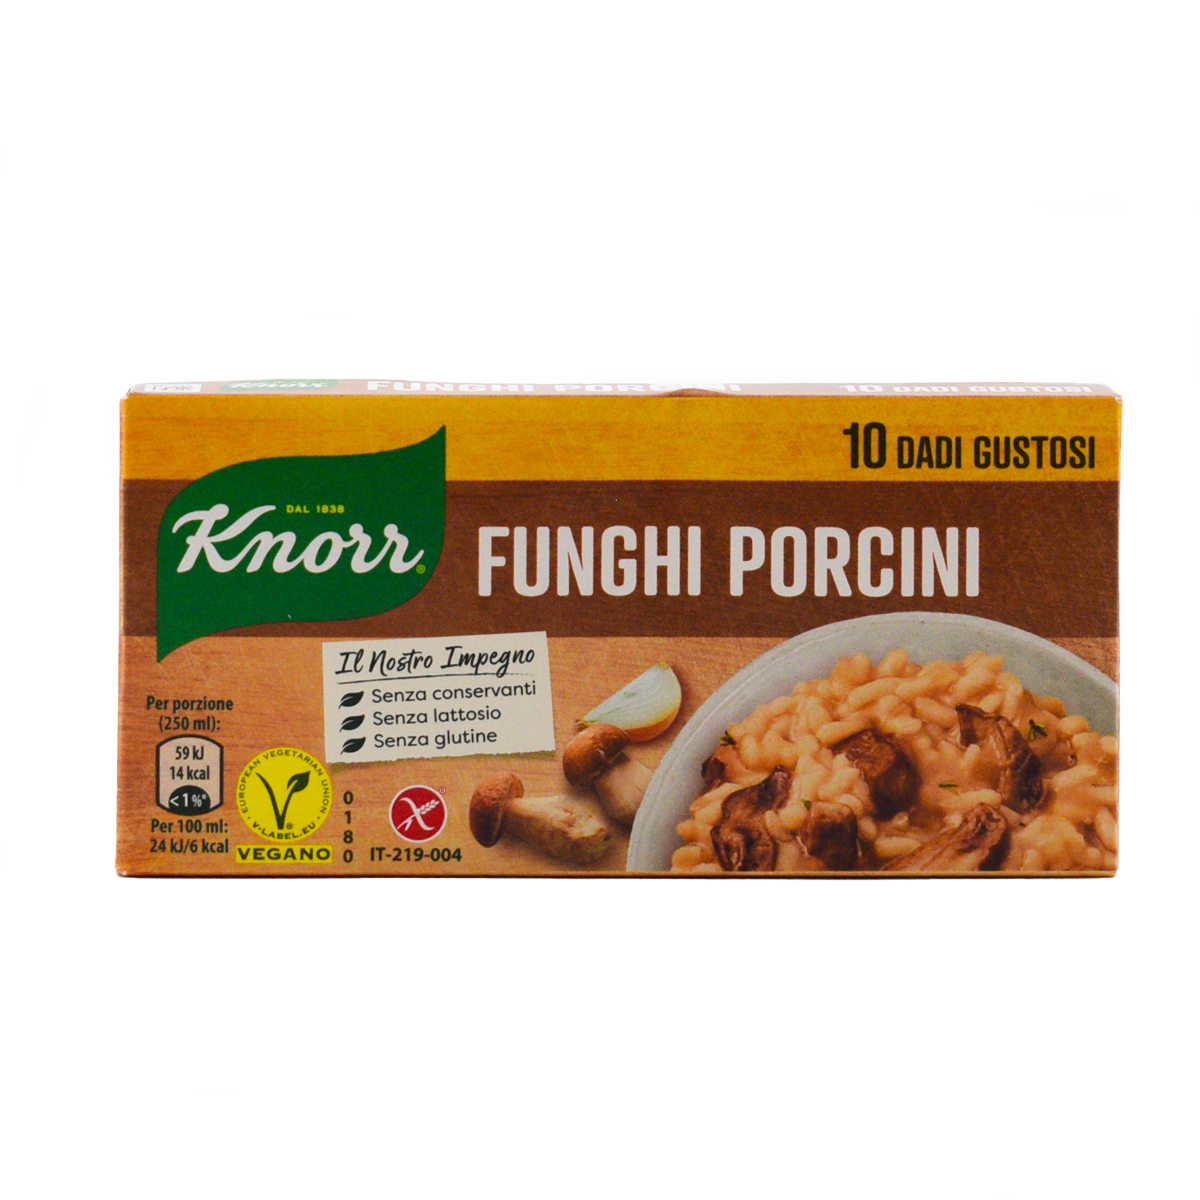 Knorr Dado ai Funghi Porcini 10 dadi